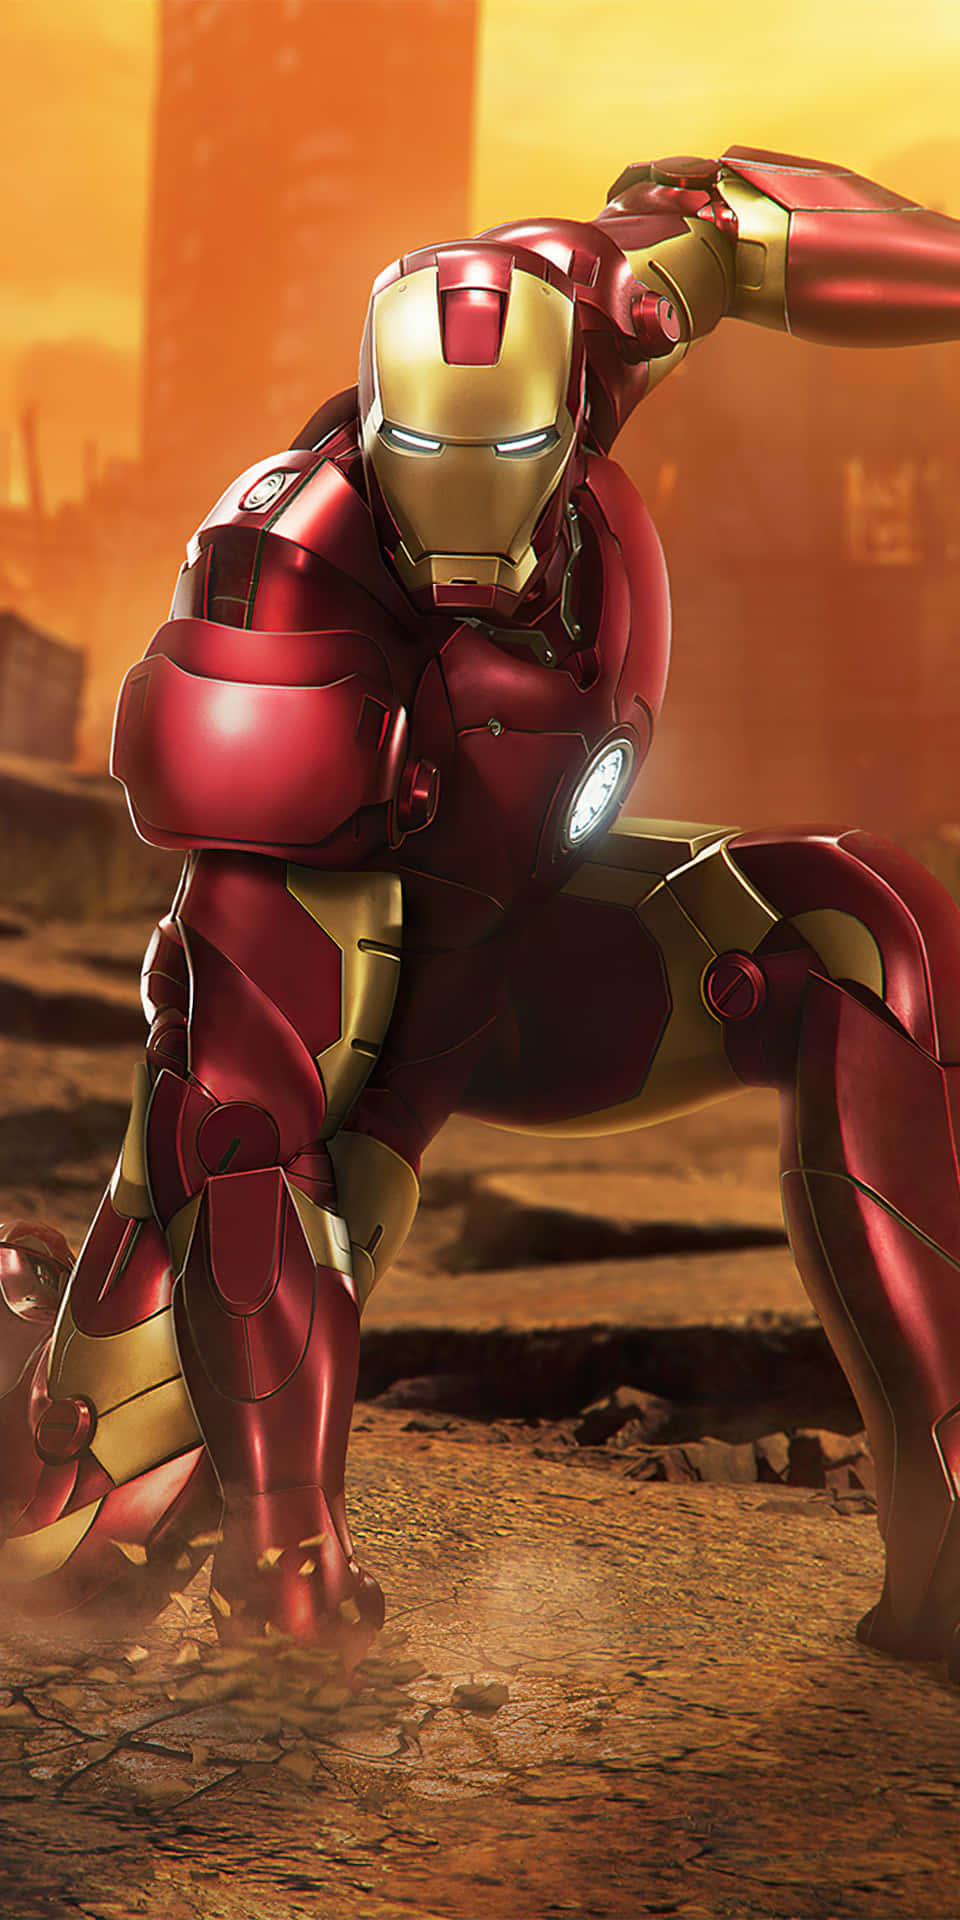 Combo's Action Figure Review: Iron Man (Revoltech)